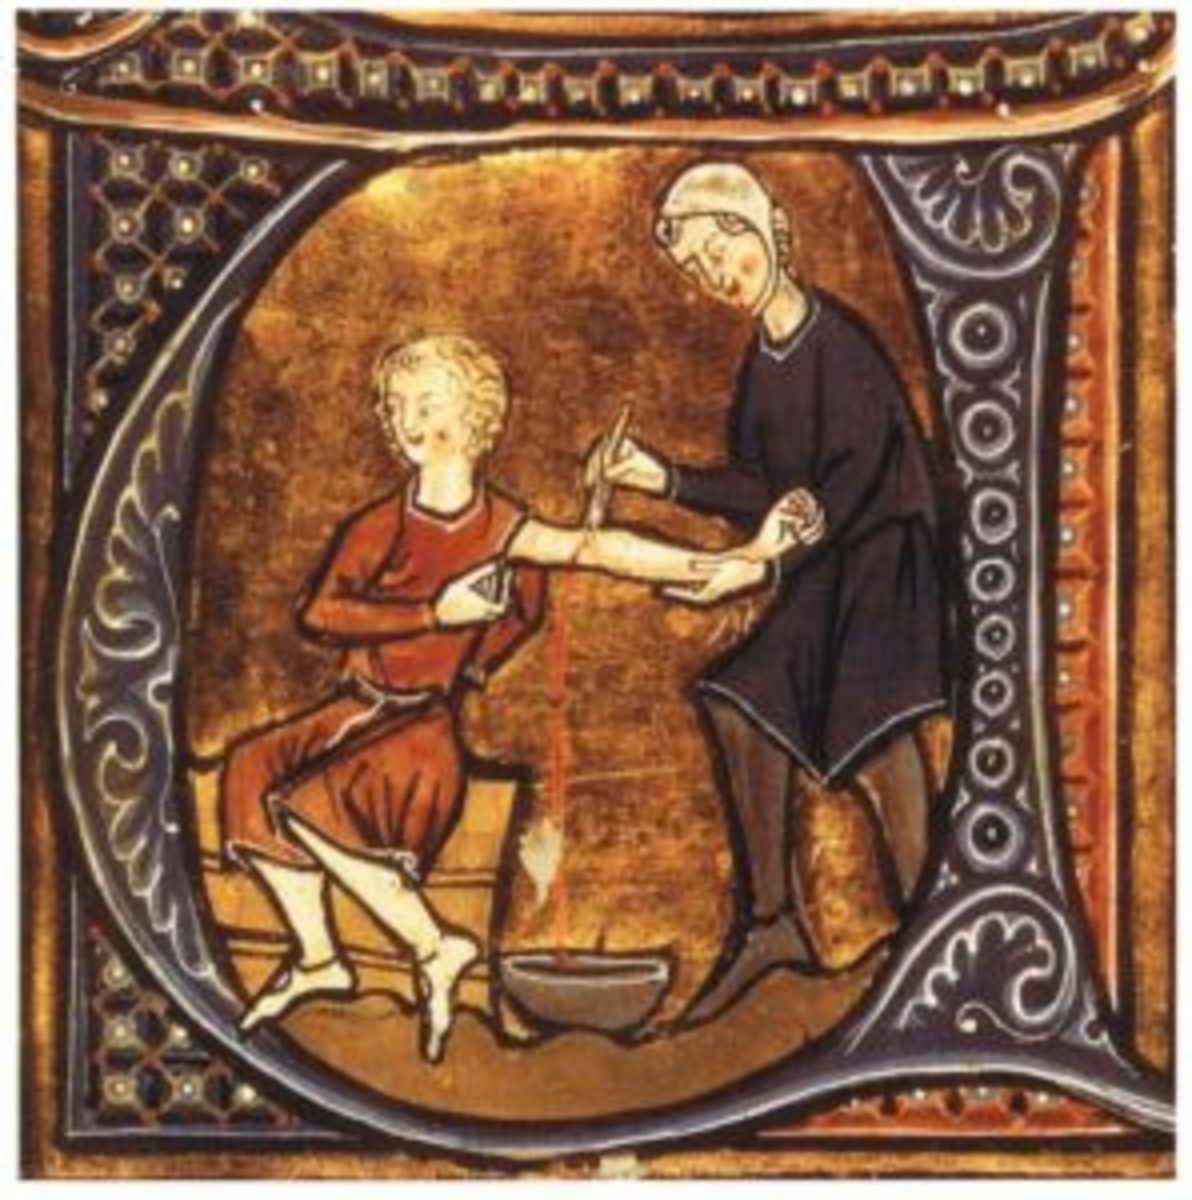 Pertumpahan darah: Obat yang diusulkan untuk hampir setiap penyakit abad pertengahan.